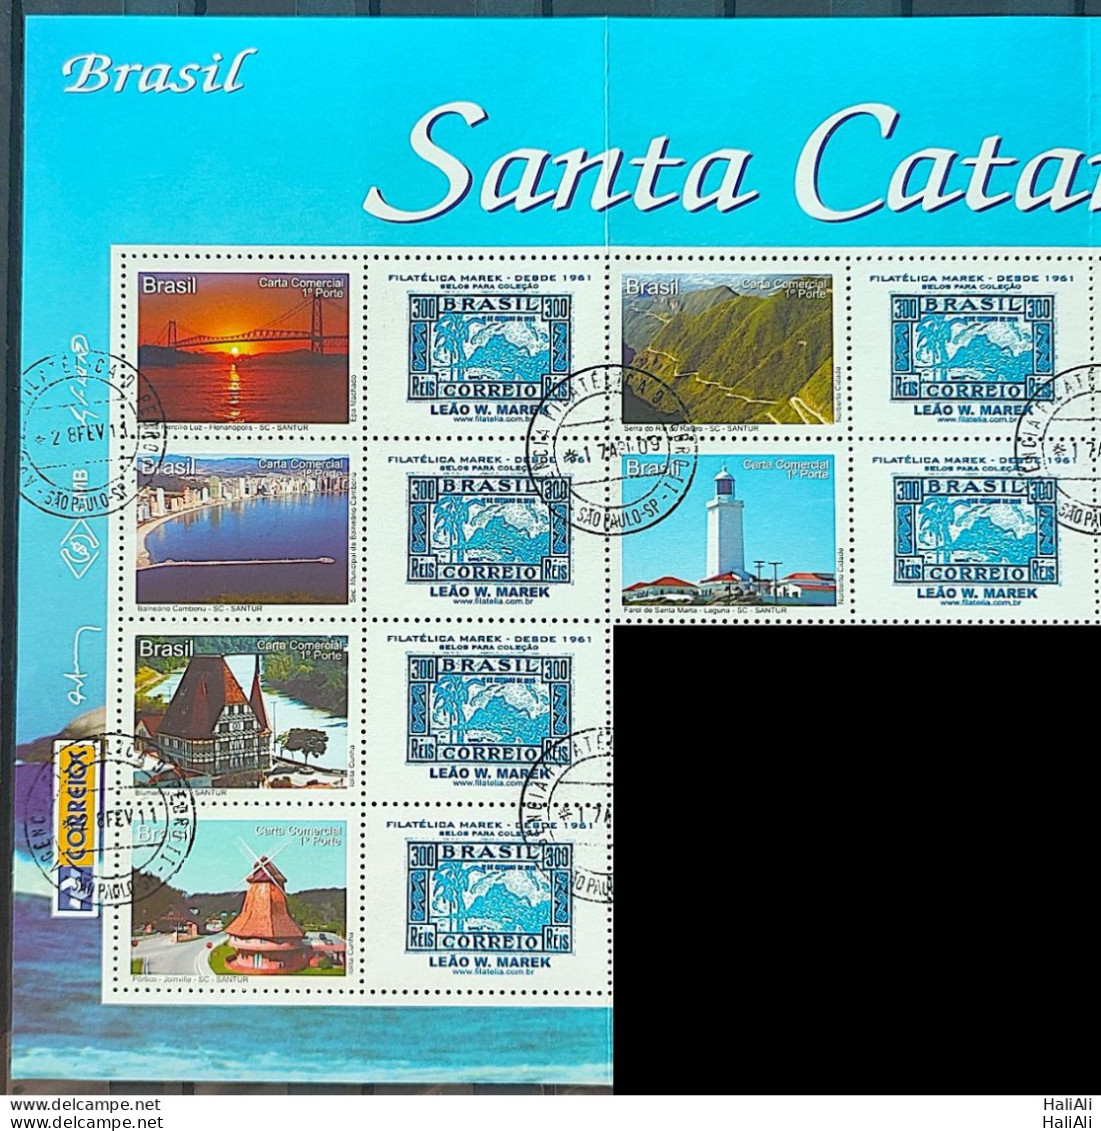 C 2783 Brazil Personalized Stamp Santa Catarina 2009 CPD SP Left Side Od The Sheet Very Rare - Personalizzati